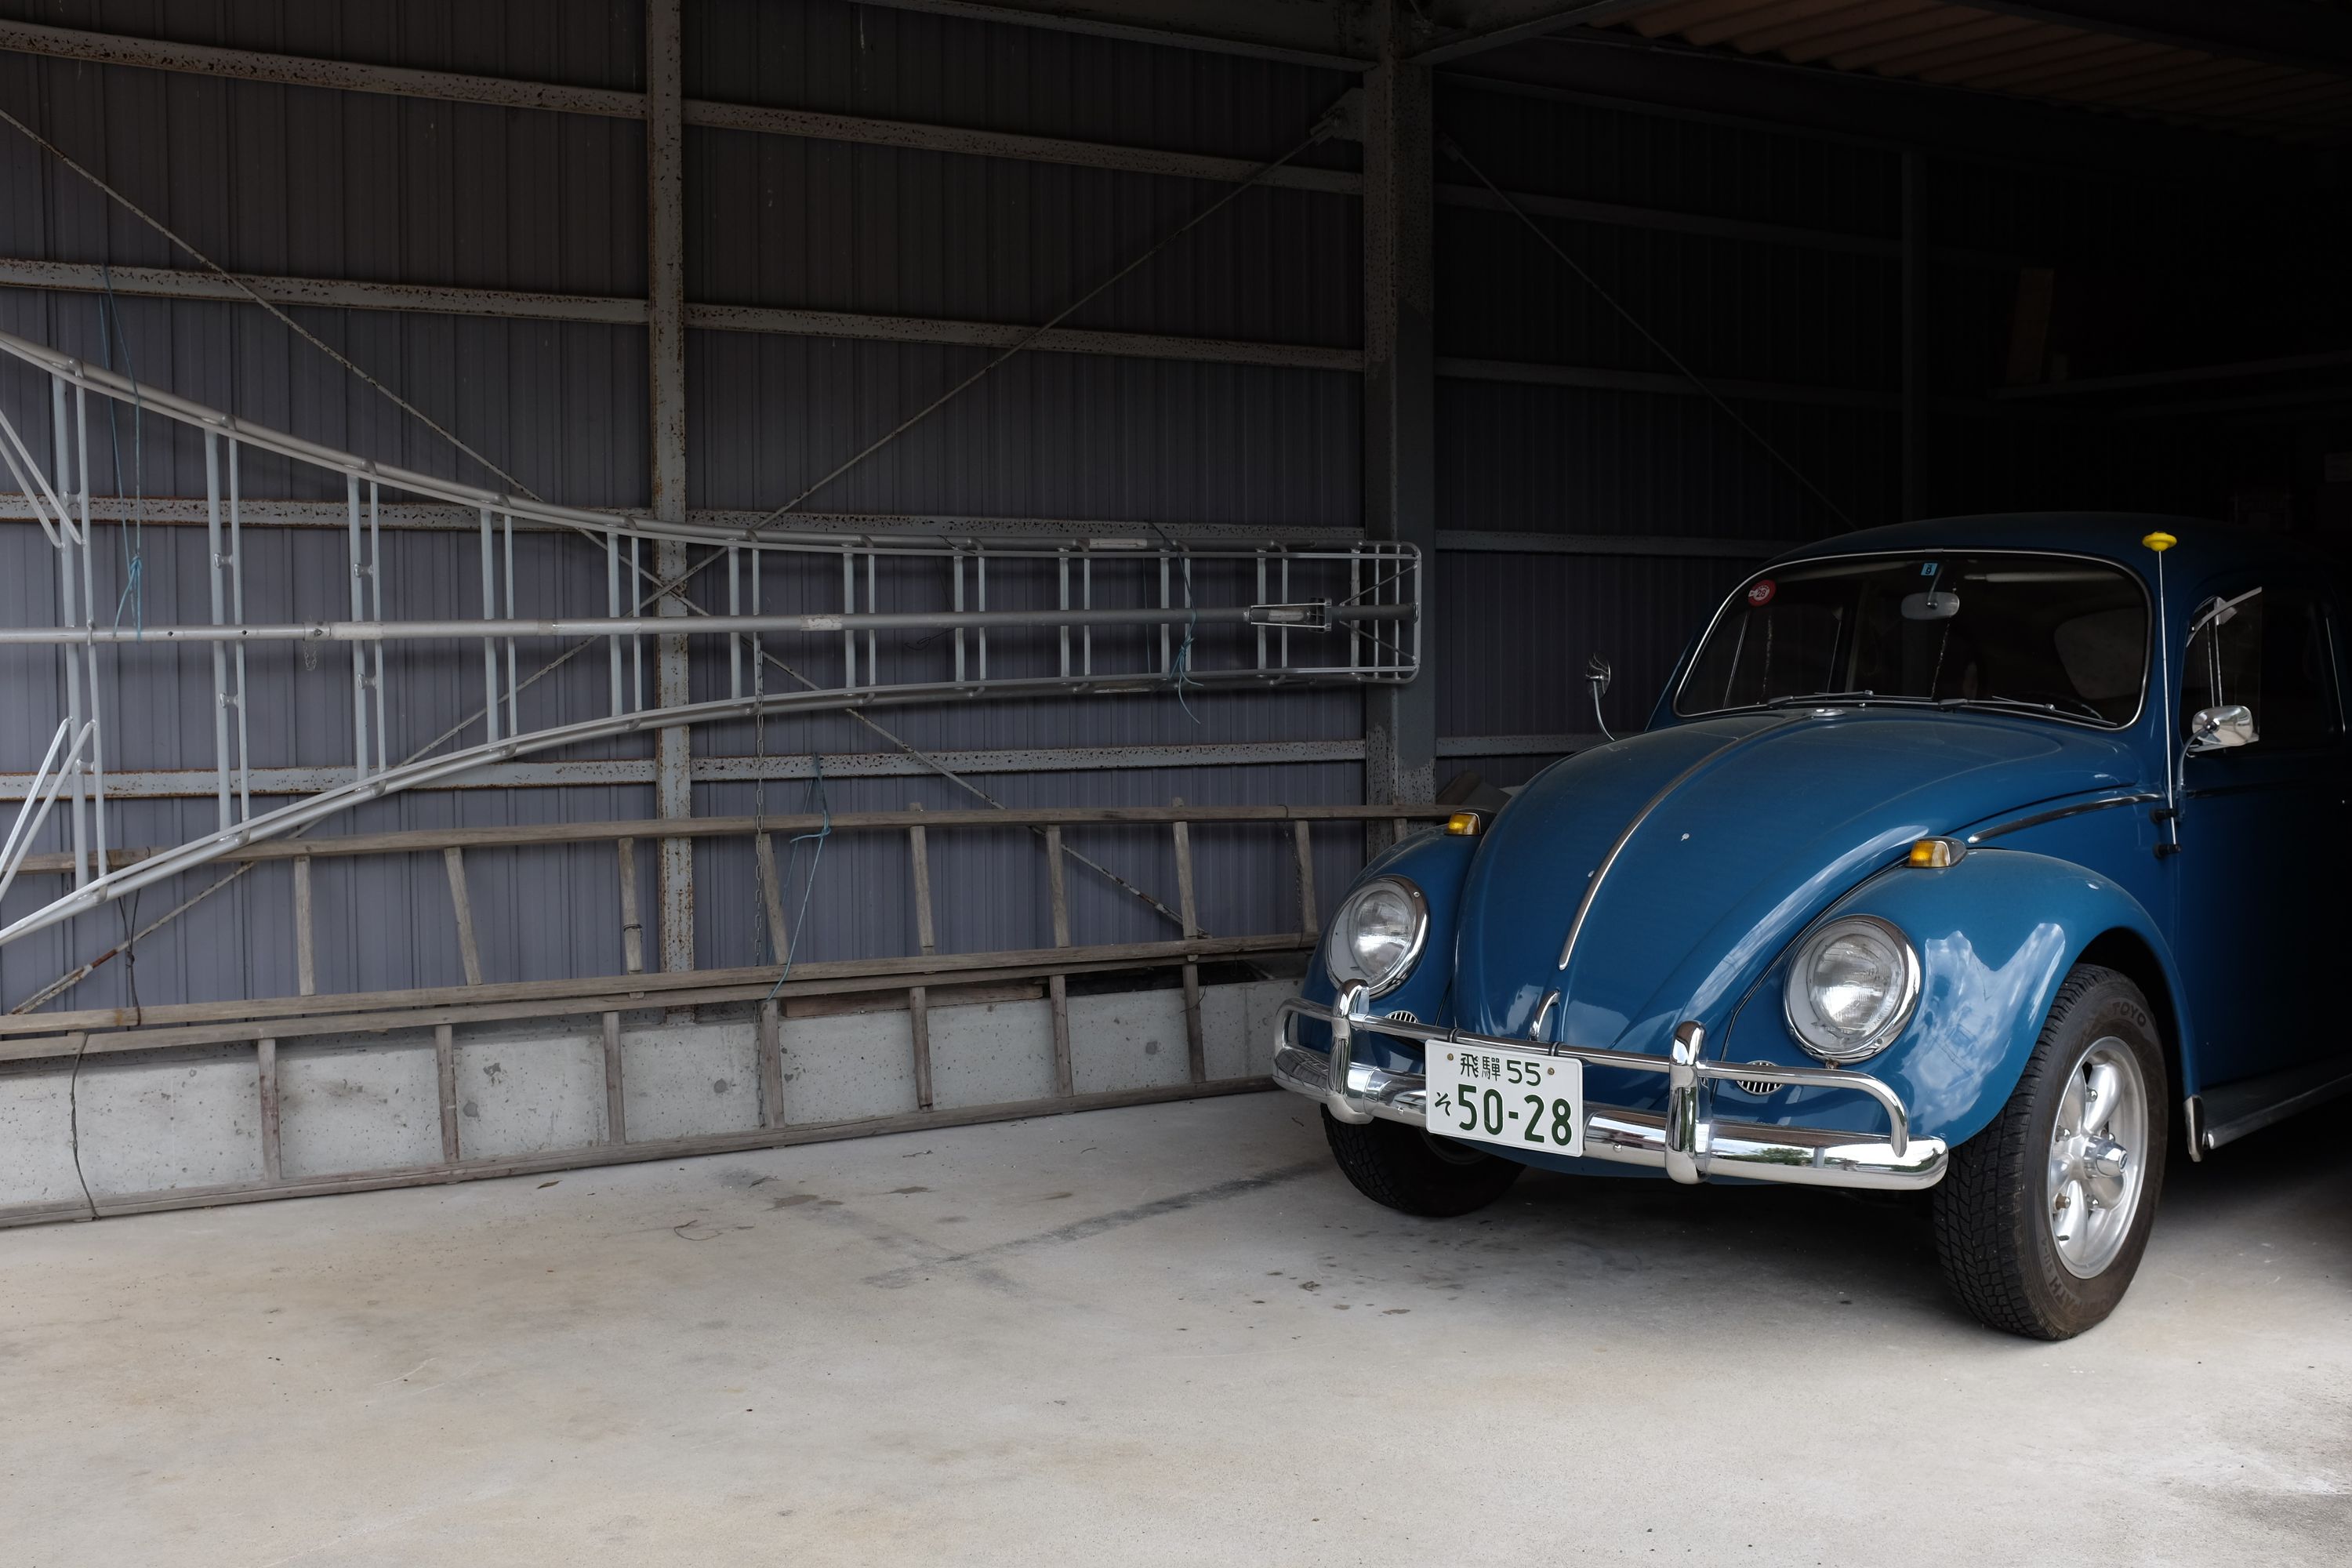 A petrol blue Volkswagen Beetle parked in a garage.